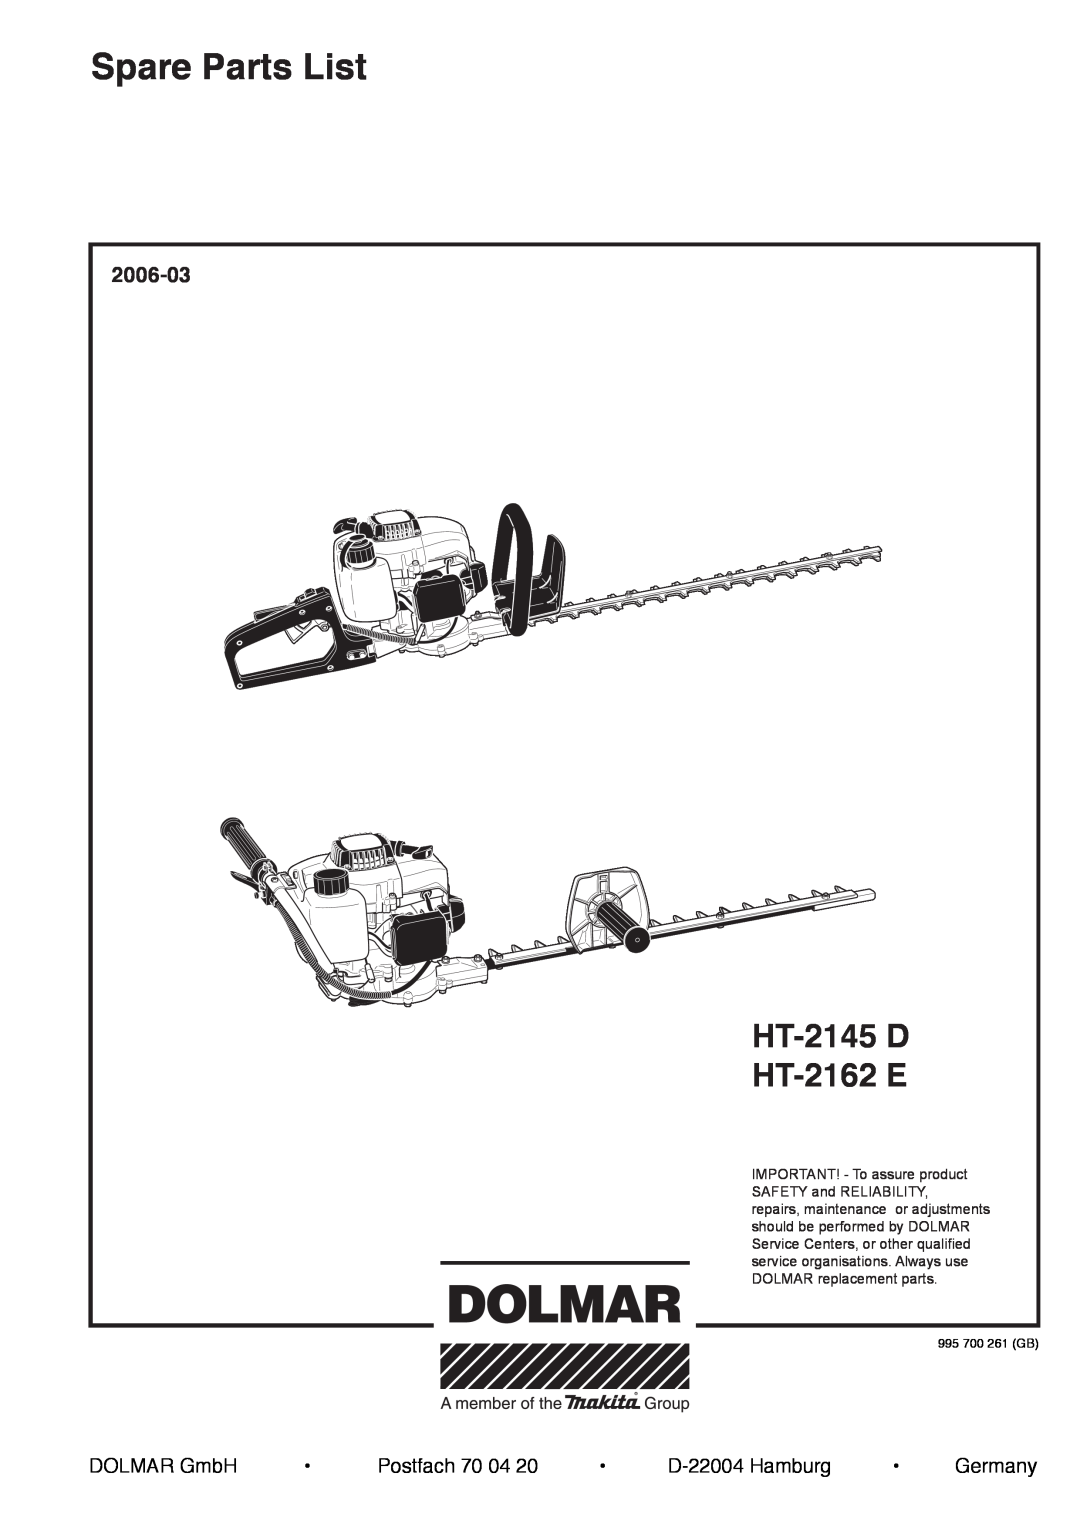 Dolmar manual Spare Parts List, HT-2145 D HT-2162 E, 2006-03, DOLMAR GmbH, Postfach, D-22004 Hamburg, Germany 